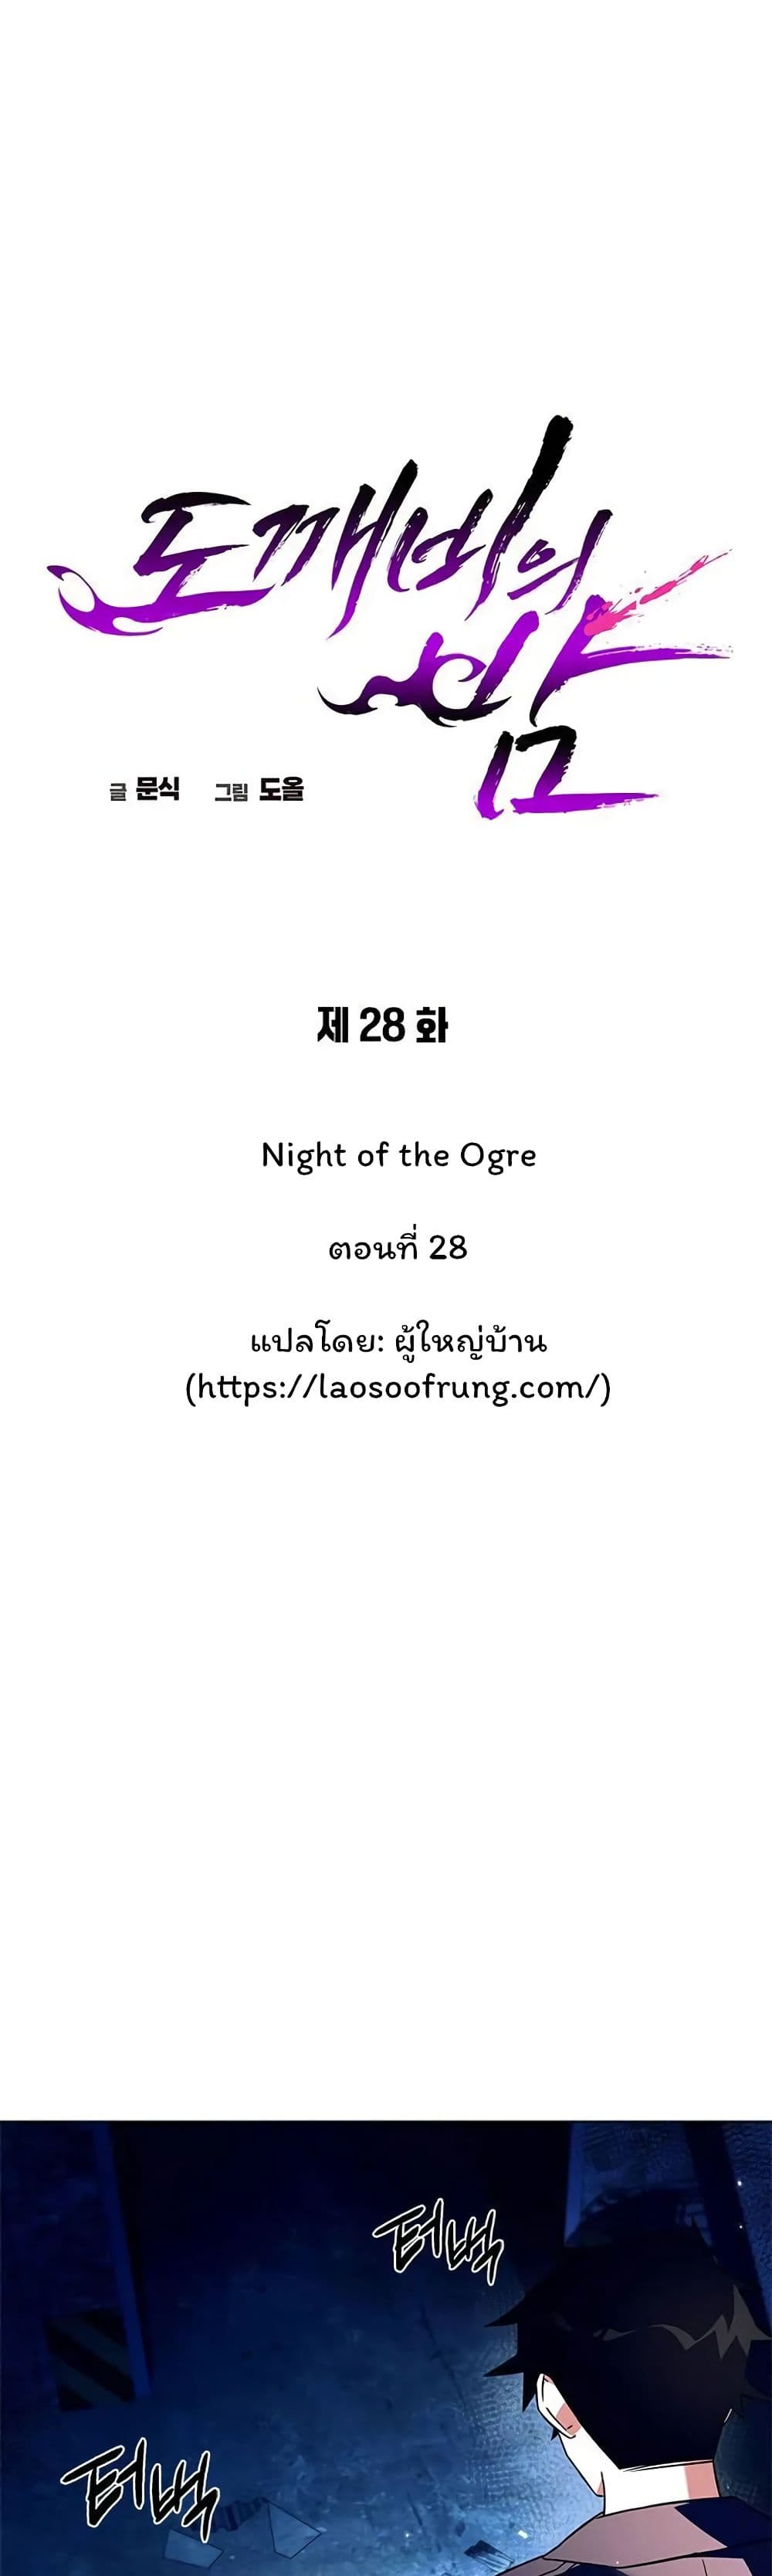 Night of the Ogre 28-28